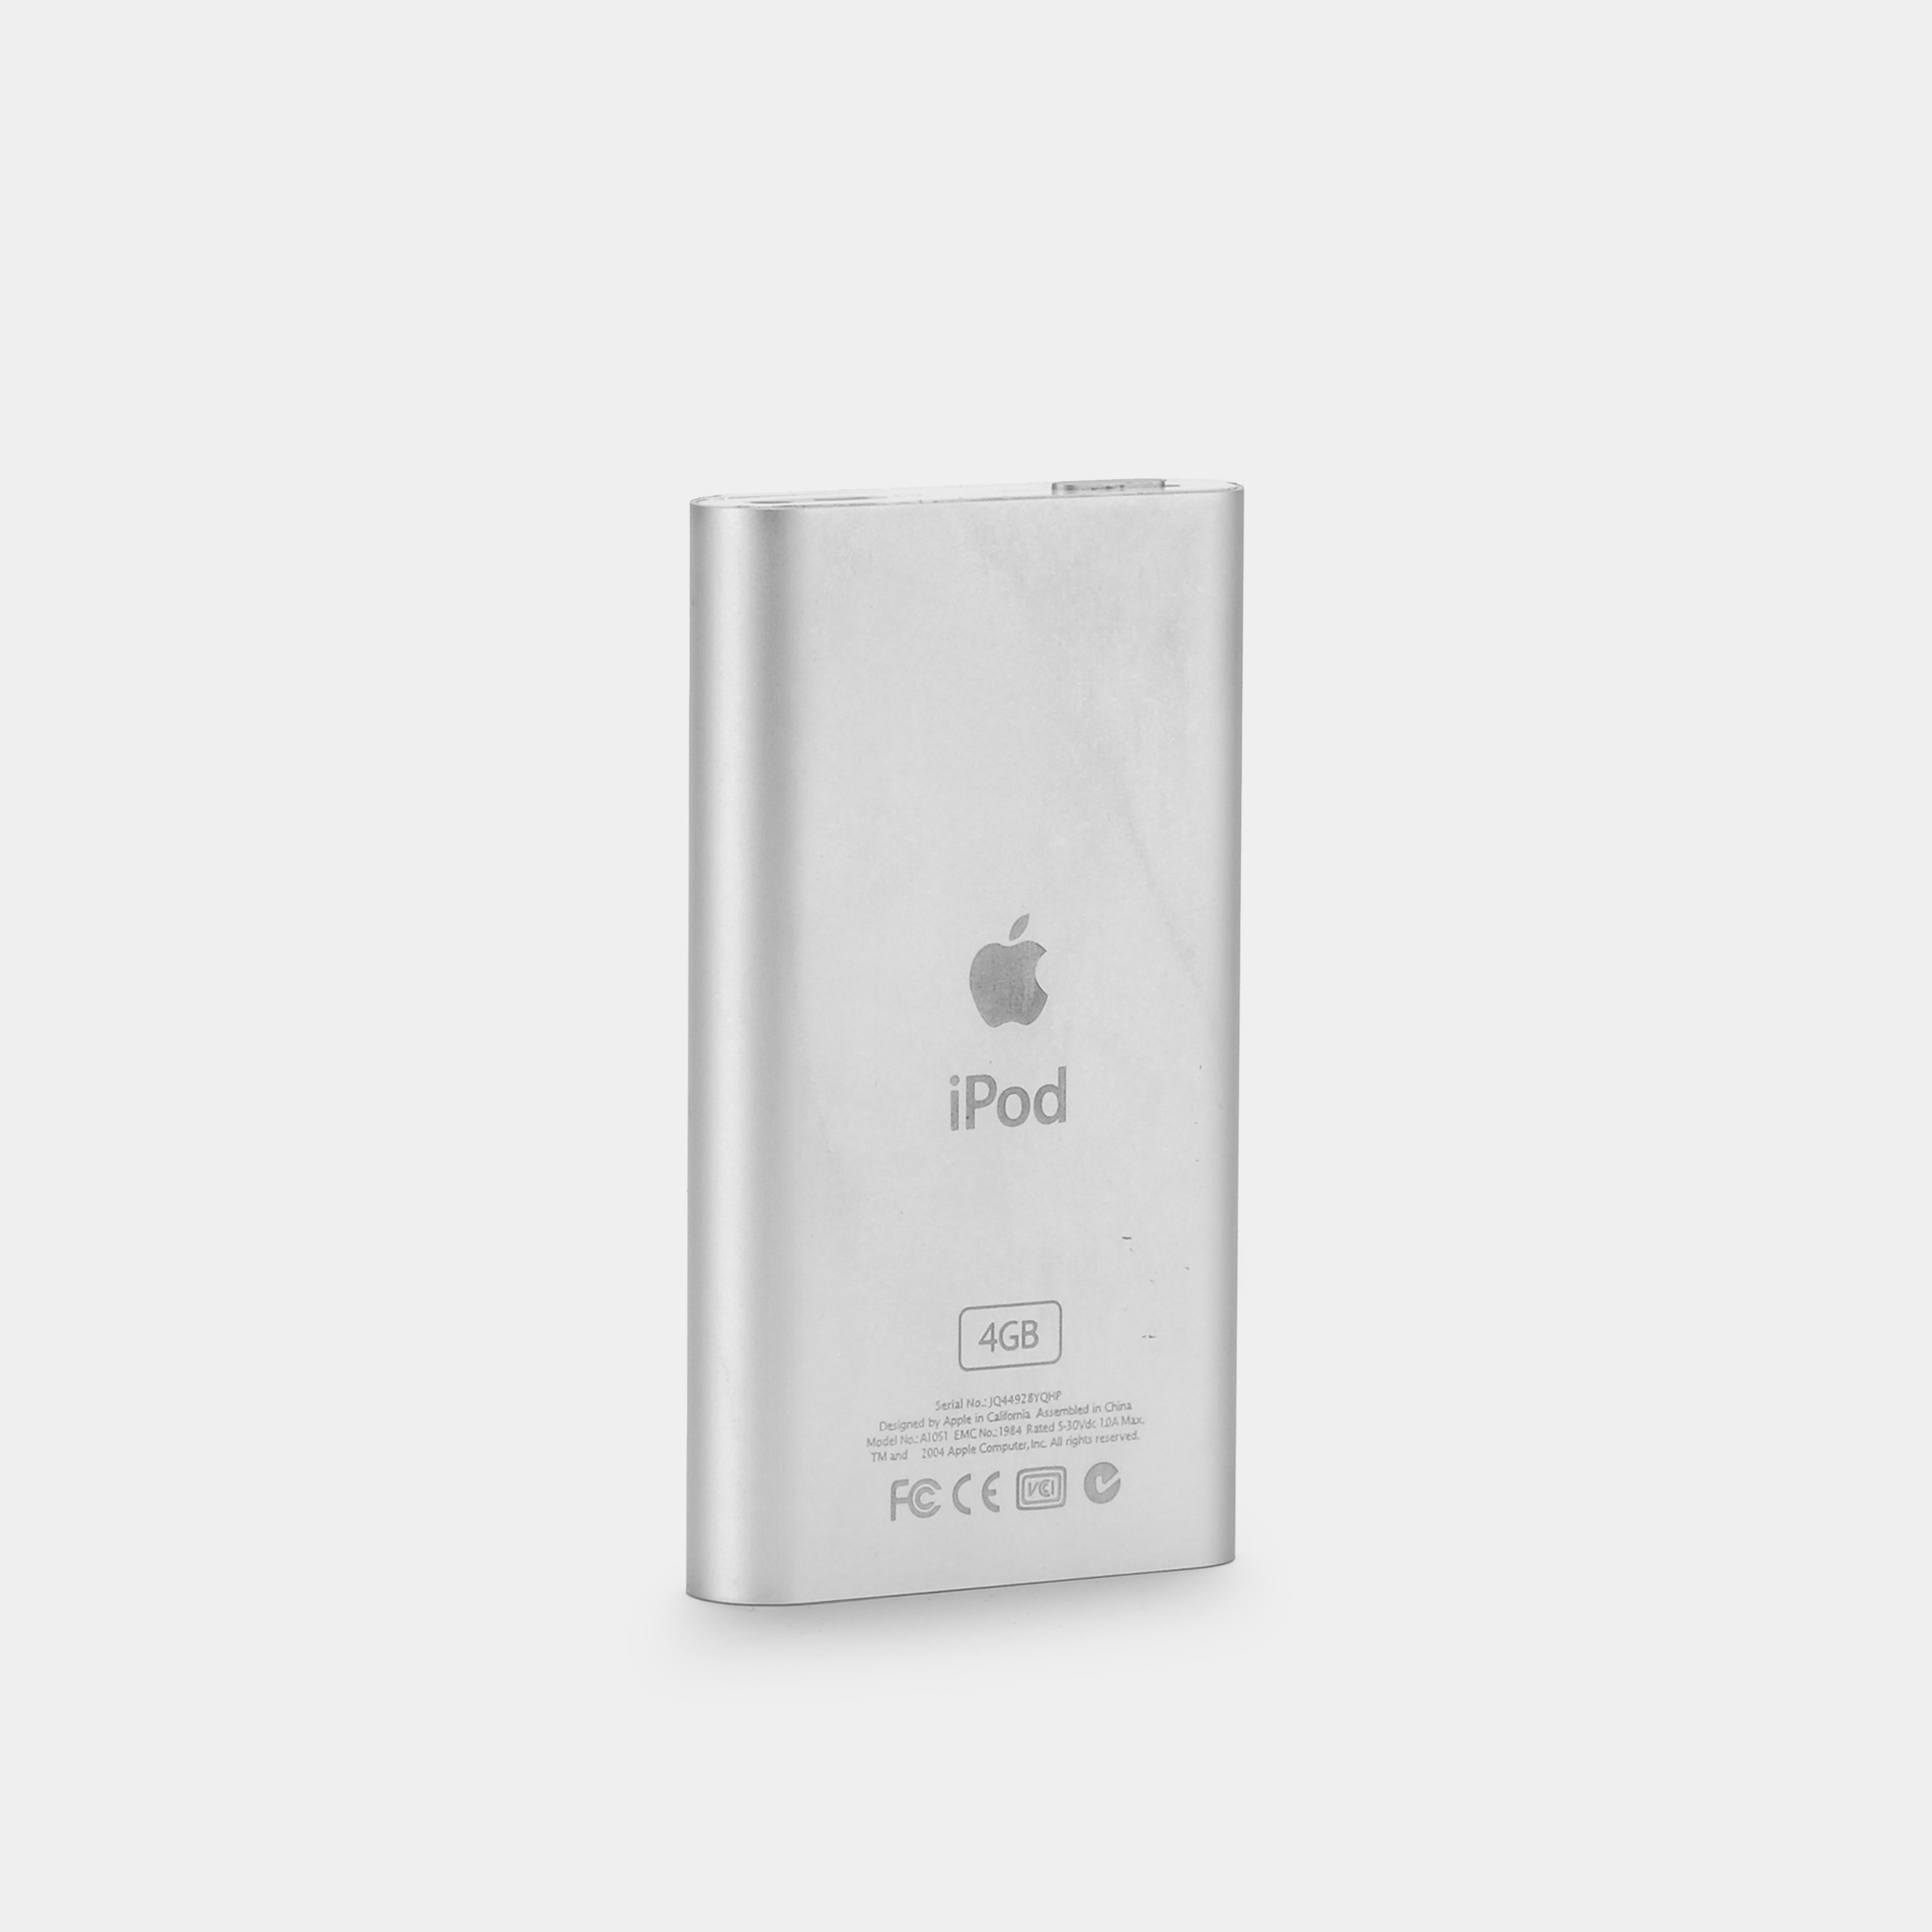 Apple iPod Mini (2nd Generation) MP3 Player